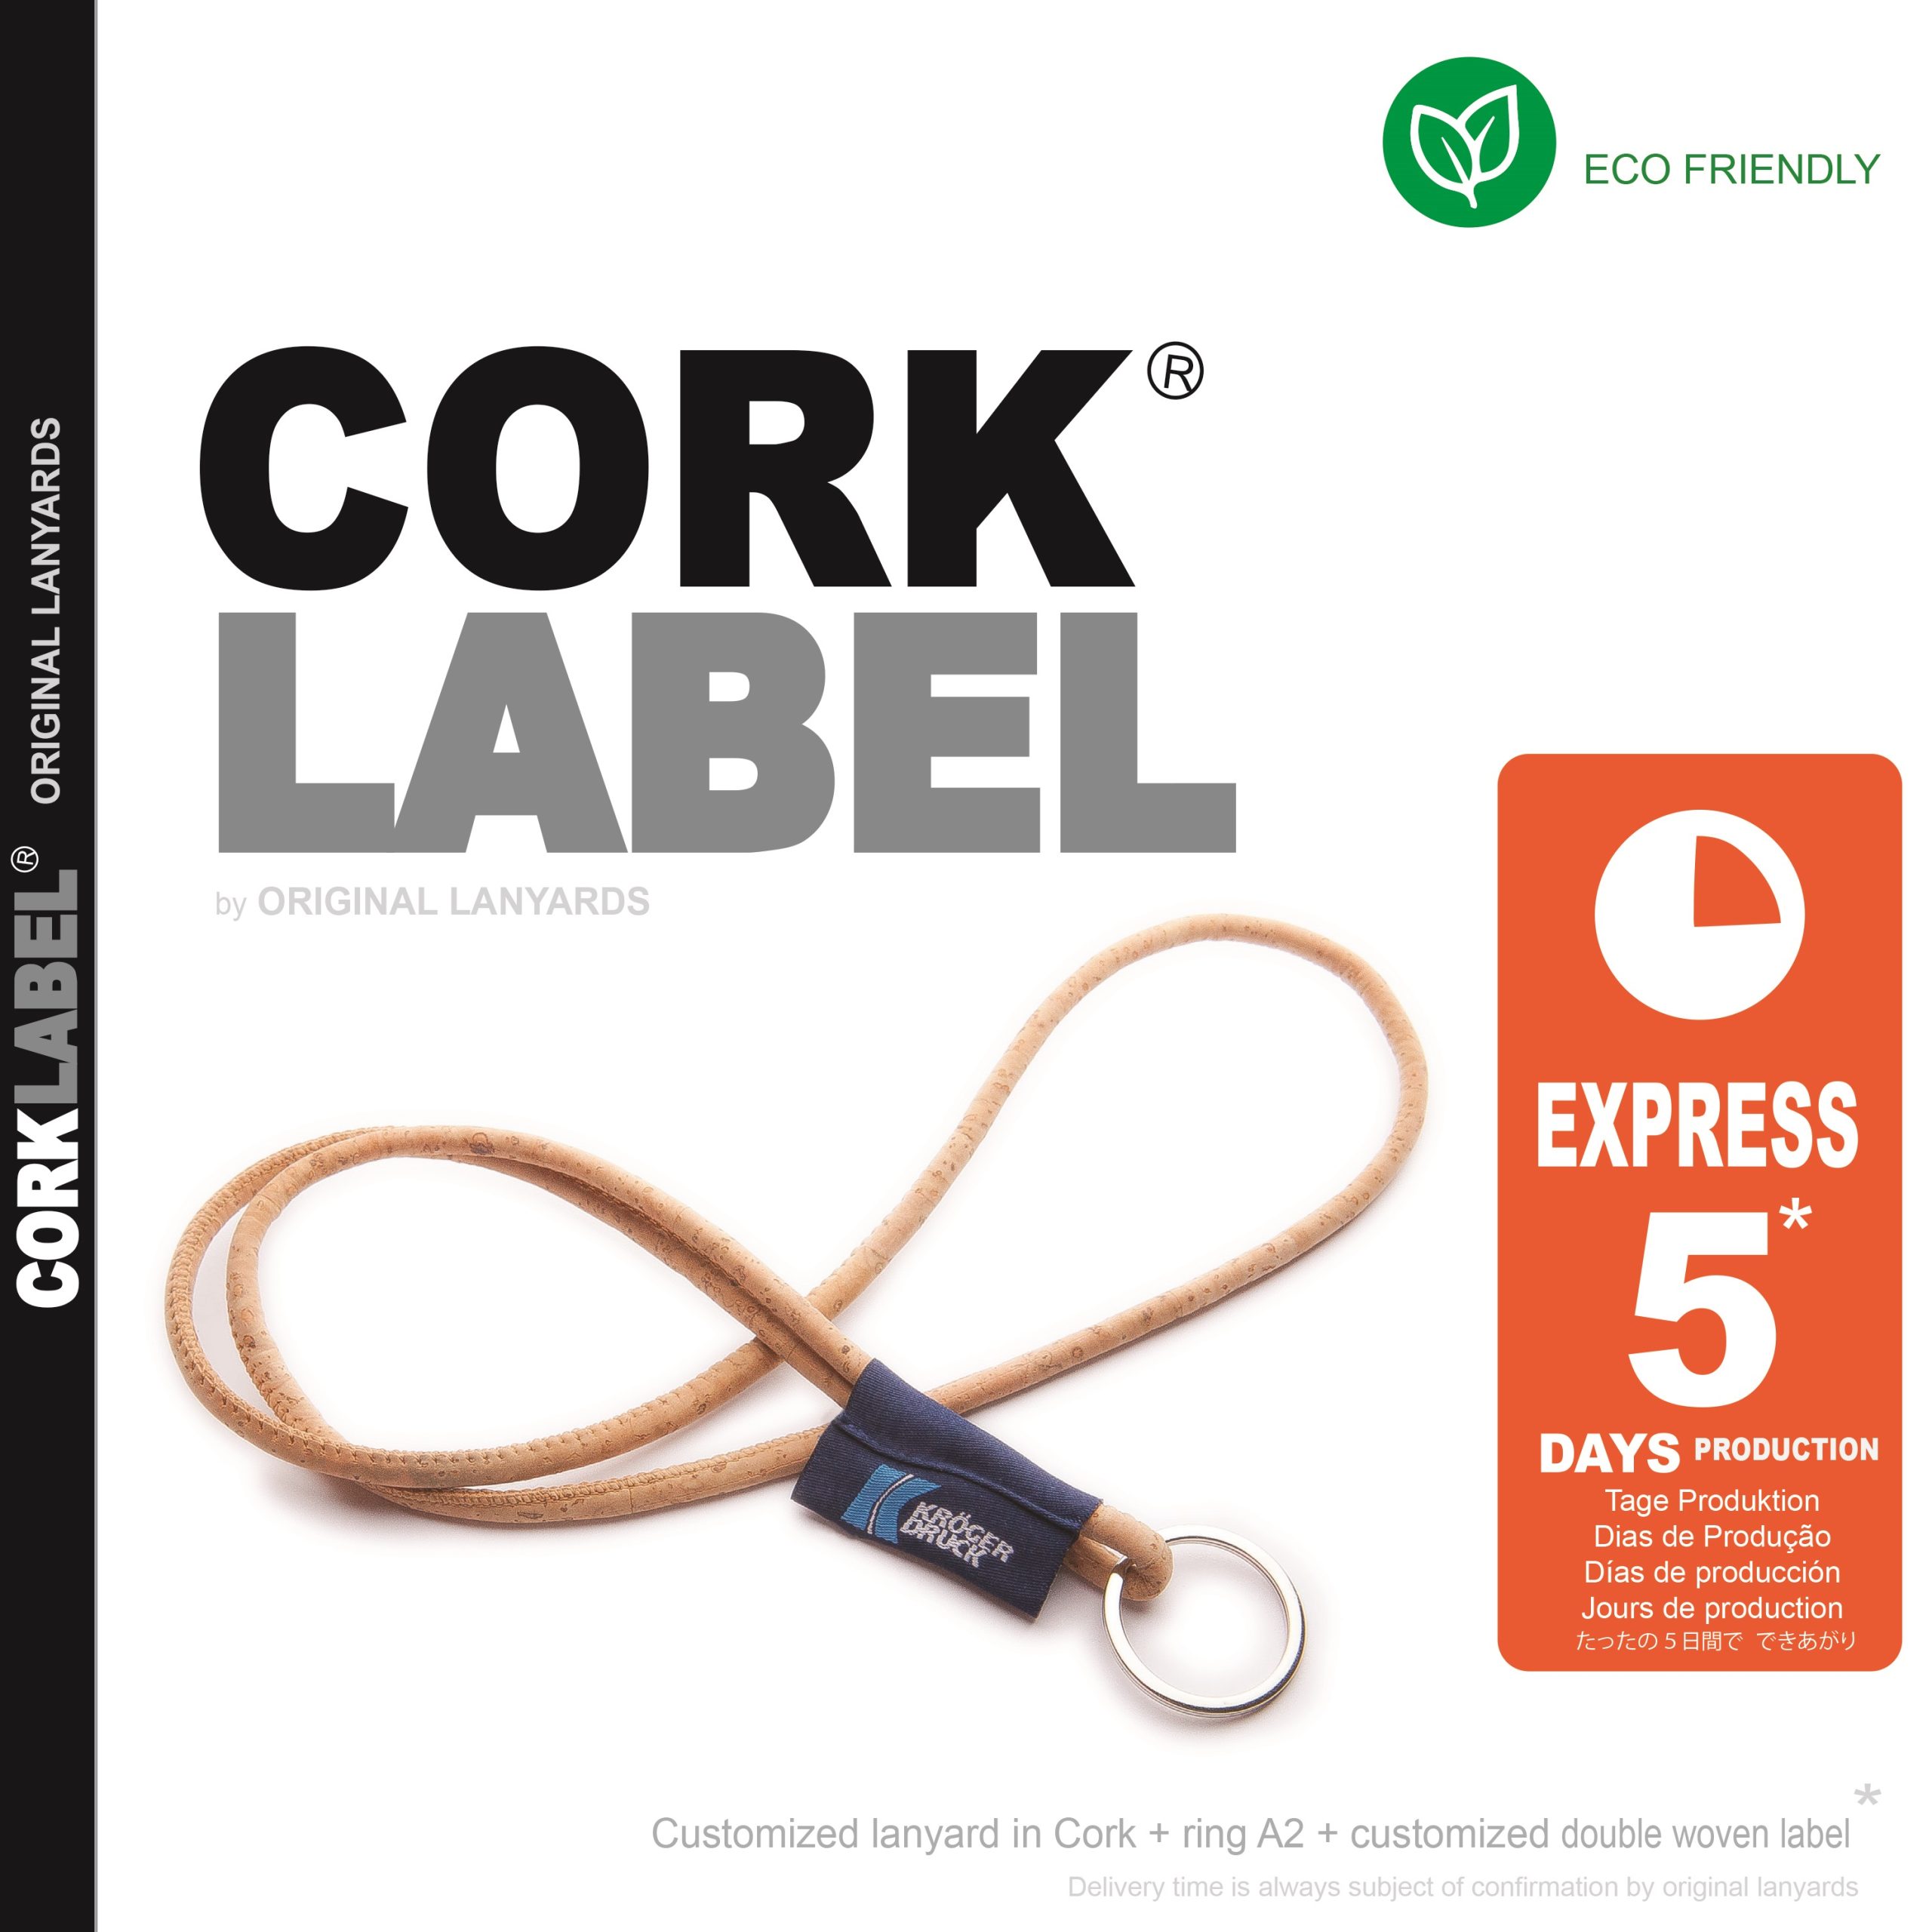 cork label express 2019 cardboard euro2